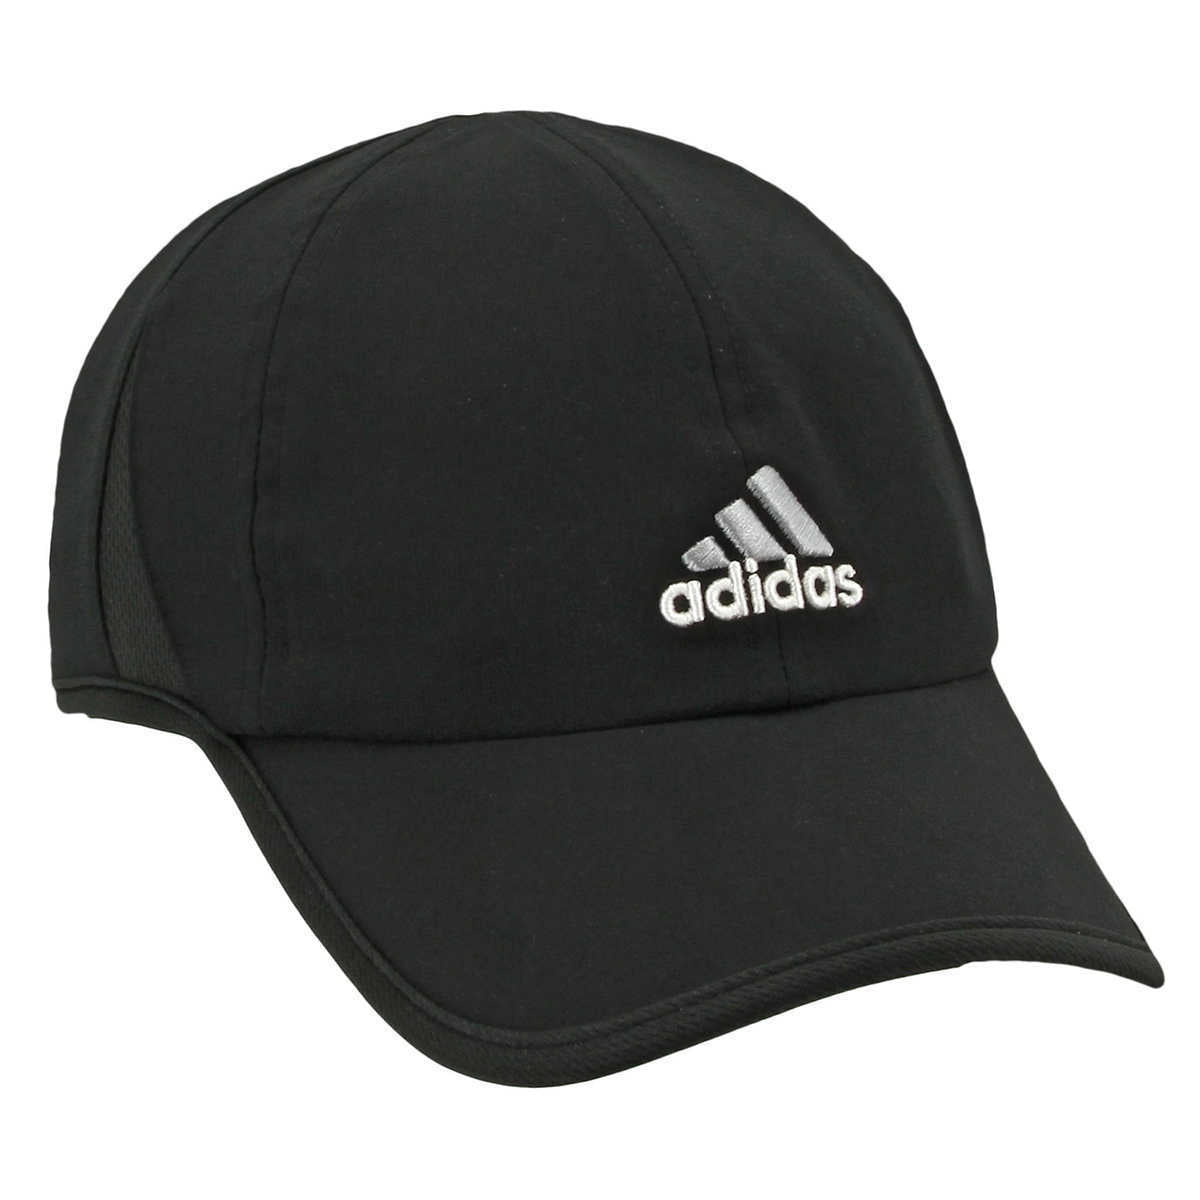 Adidas Adizero Climacool Cap Men/Women Hat Workout UPF50 Sun Protection - Walmart.com